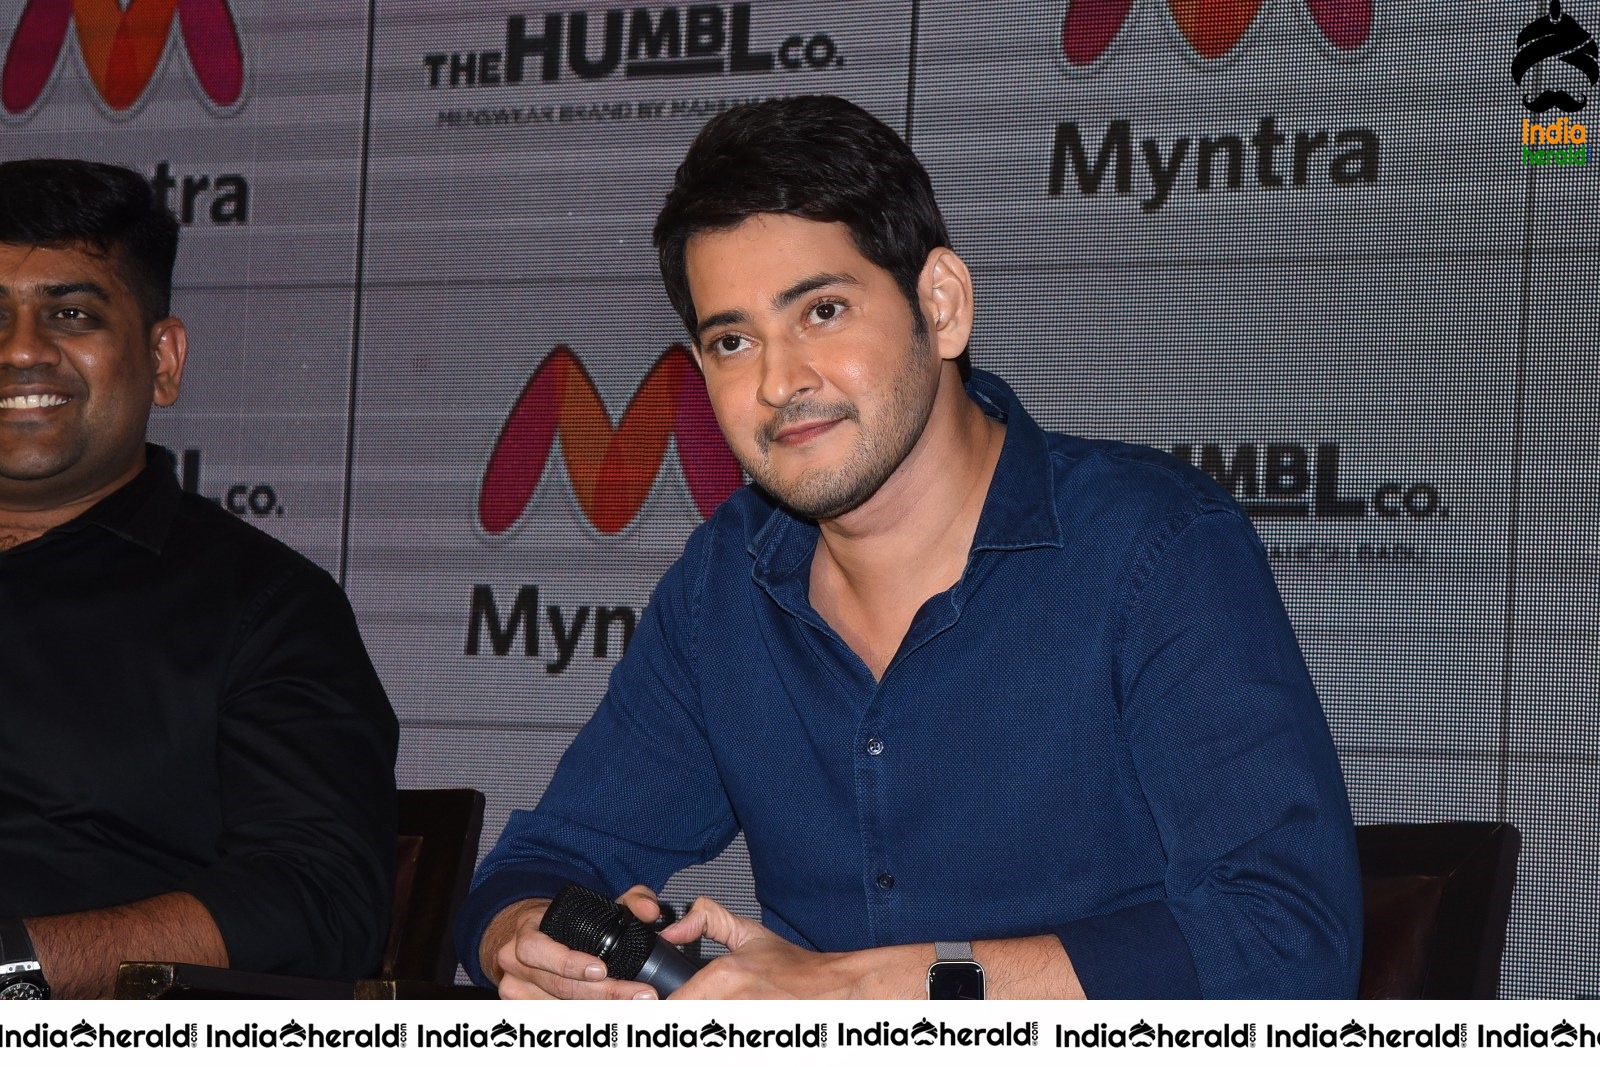 Mahesh Babu Launches His Apparel Brand The Humbl co On Myntra Set 6